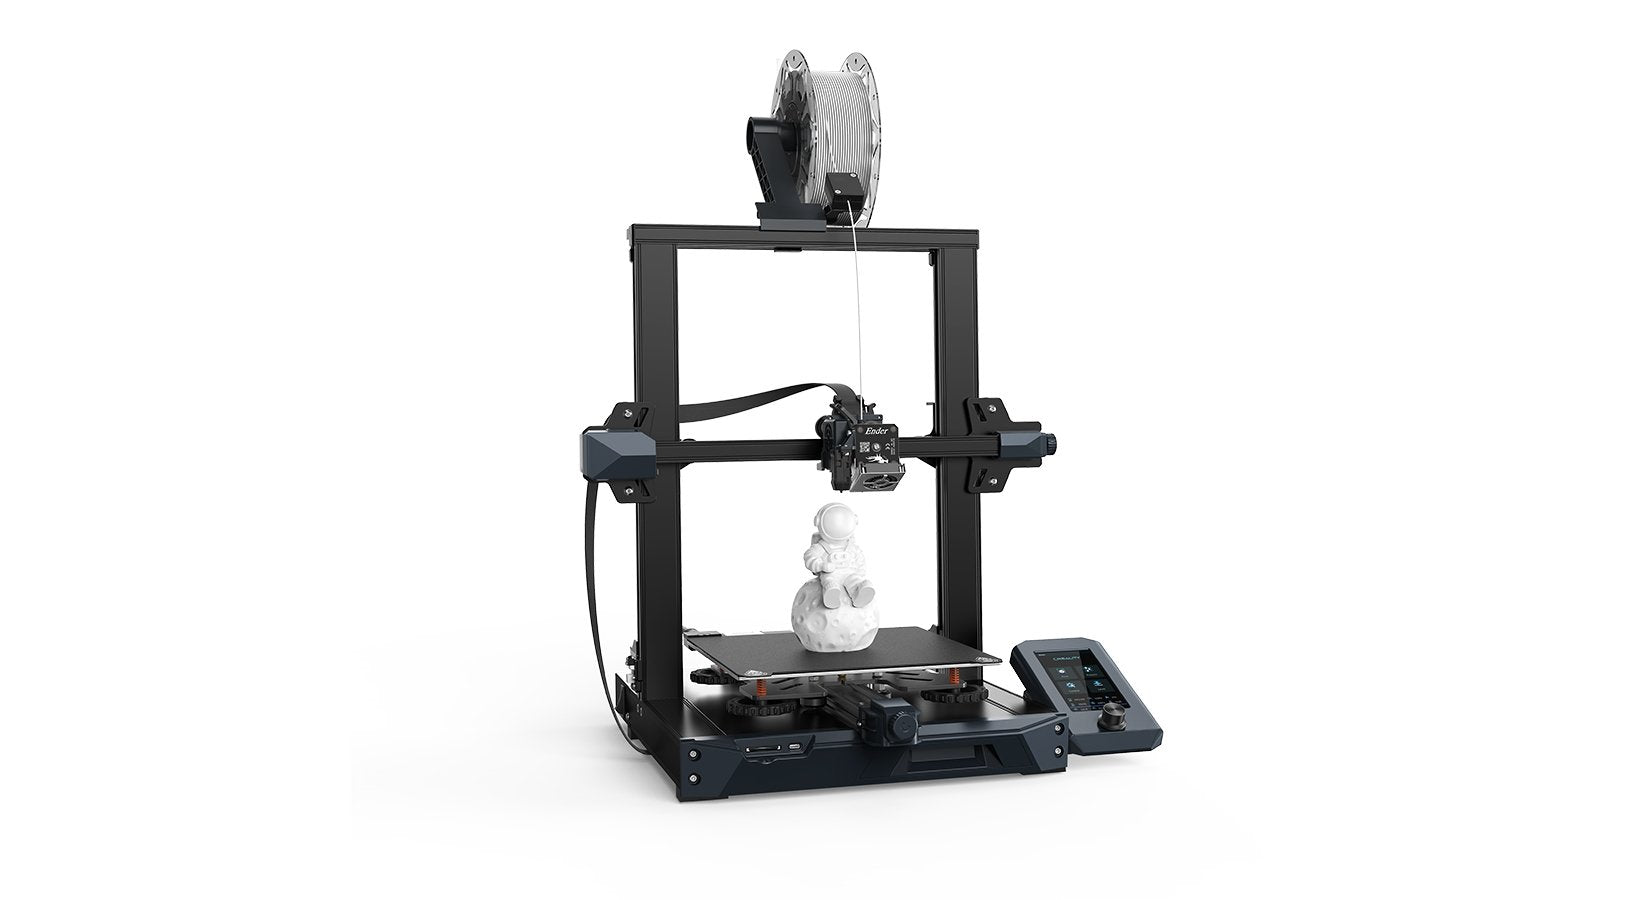 Creality Ender-3 S1 Plus Desktop 3D Printers - Specifications - 3D Printing